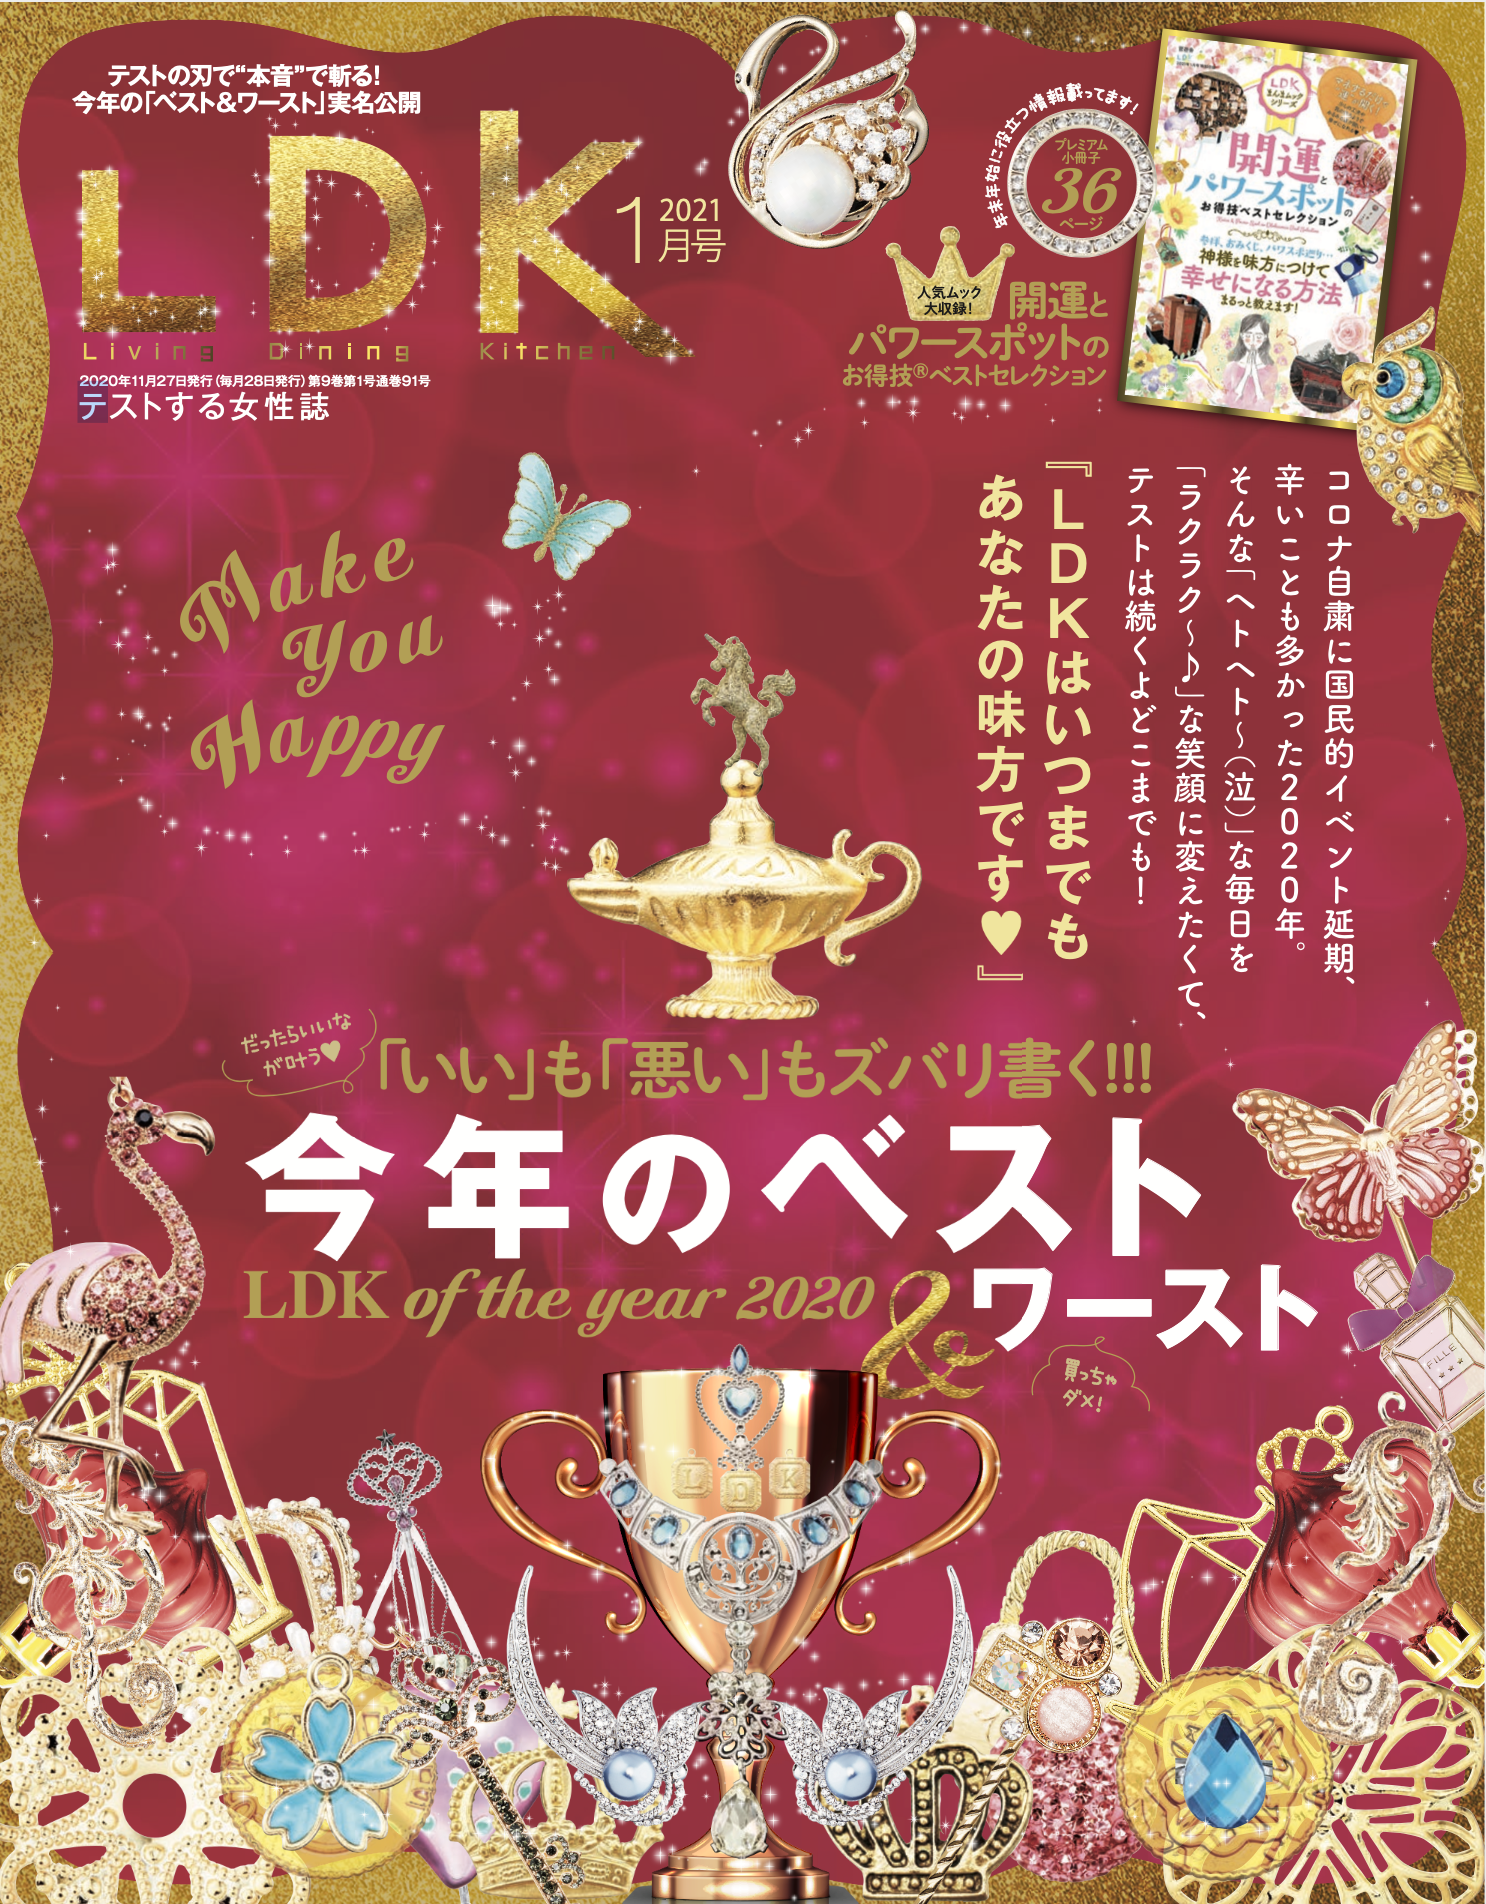 Ldk いいもの大賞発表 テストする女性誌が選ぶ 本当にいいもの とは 21年1月号発売中 株式会社晋遊舎のプレスリリース